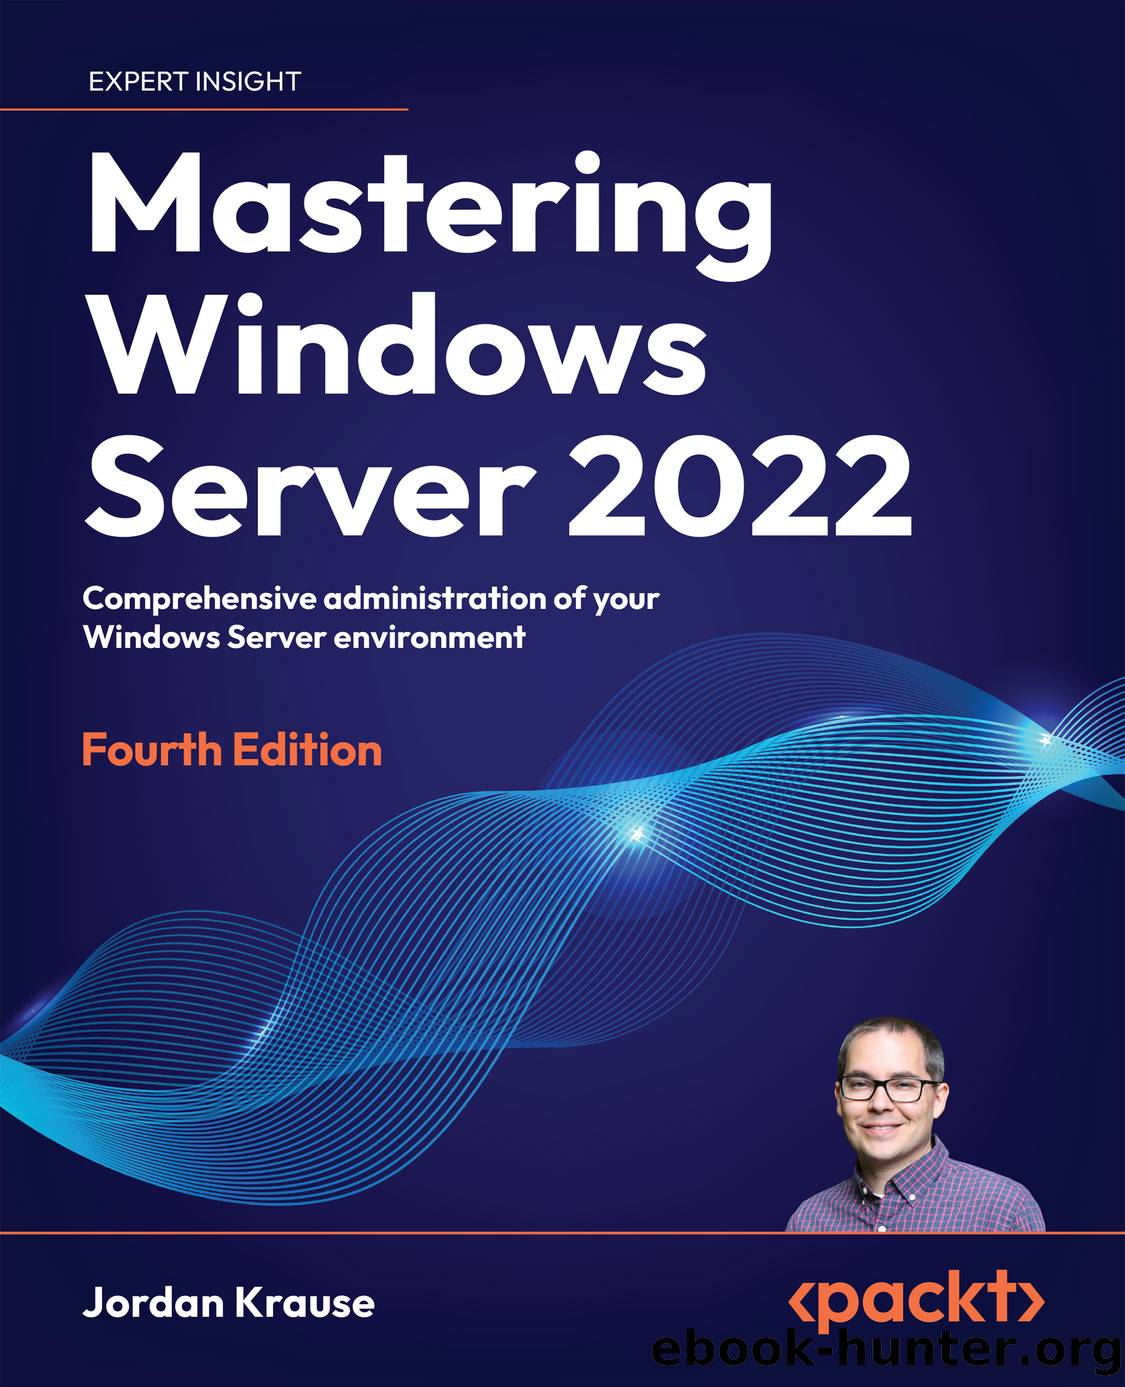 Mastering Windows Server 2022 - Fourth Edition by Jordan Krause